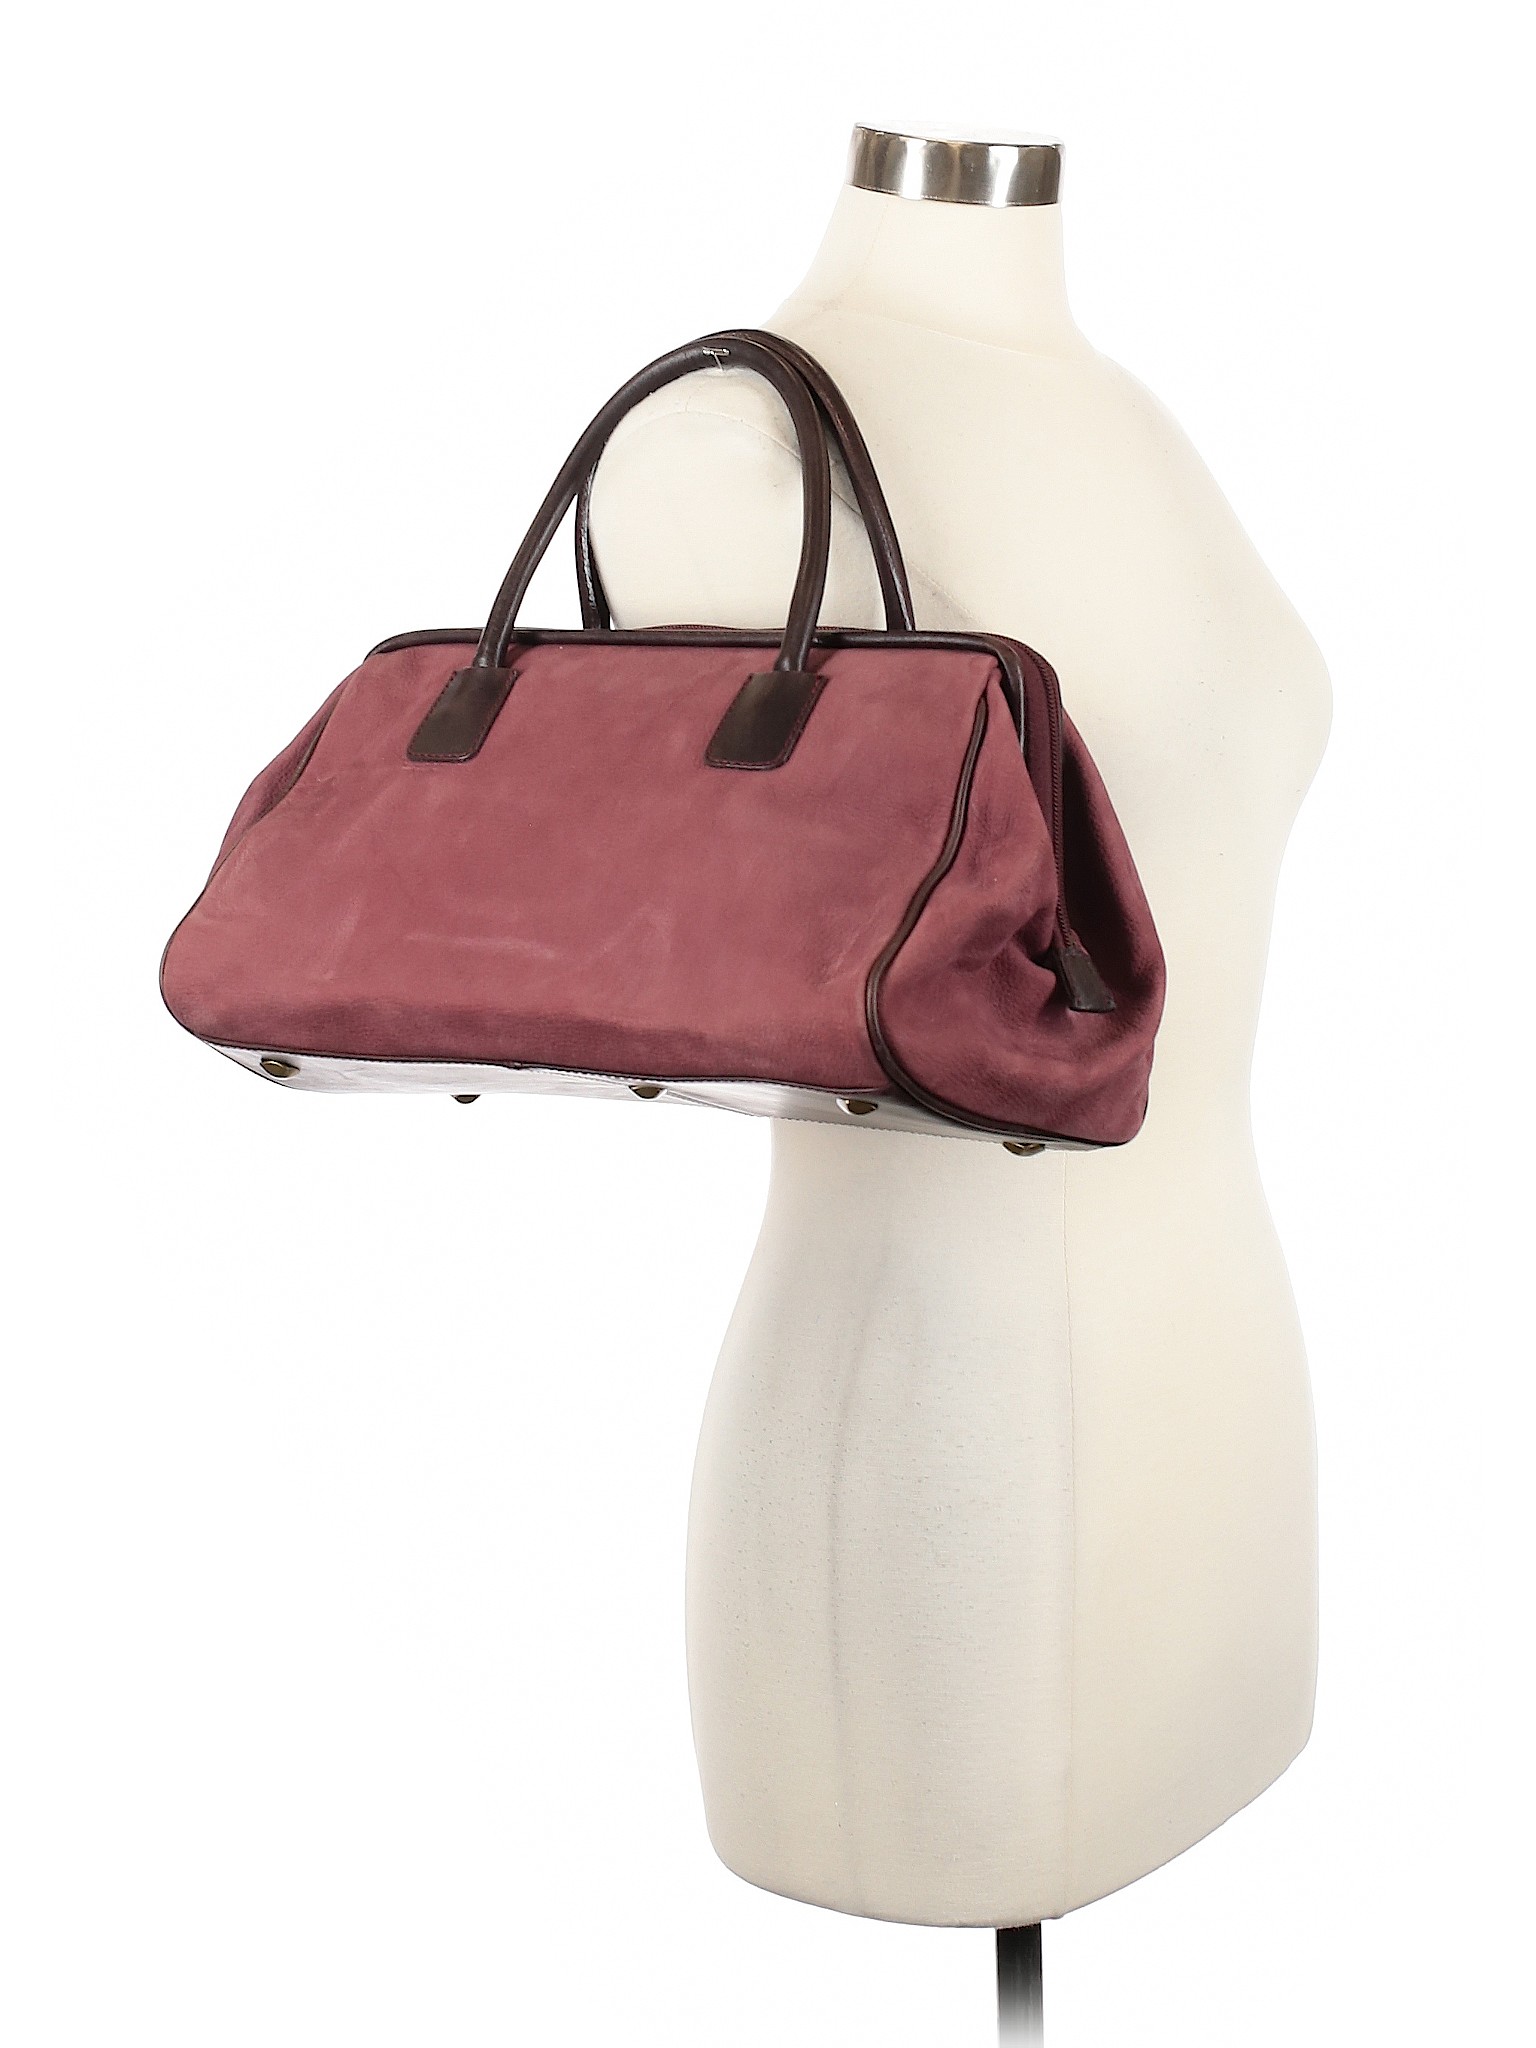 J.jill Women Pink Leather Shoulder Bag One Size | eBay